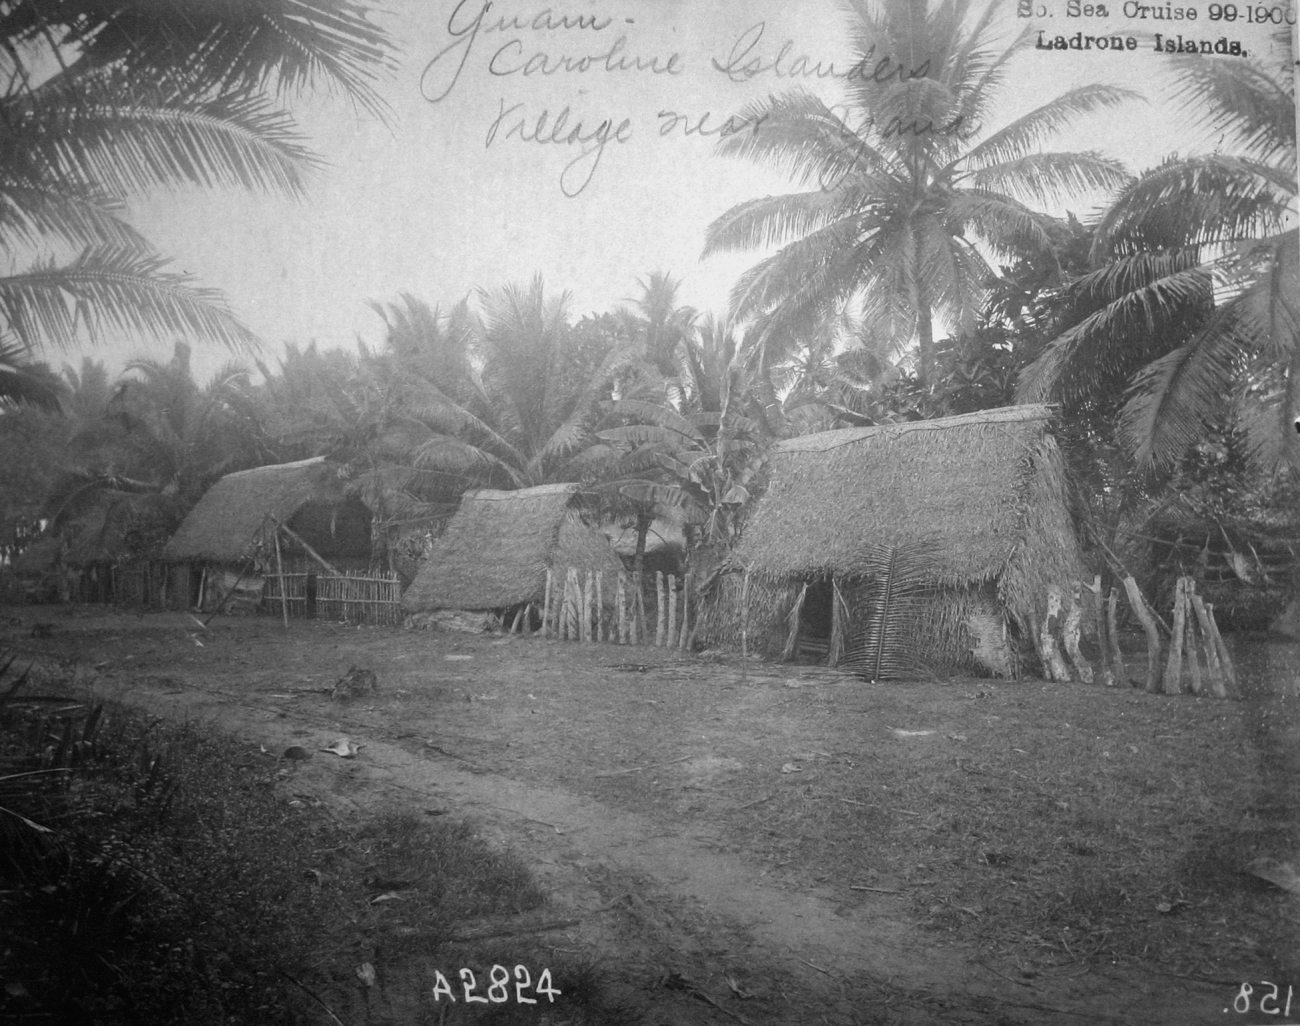 South Sea cruise 99-1900, Ladrone Islands, Guam, Carolineislanders village near Agana